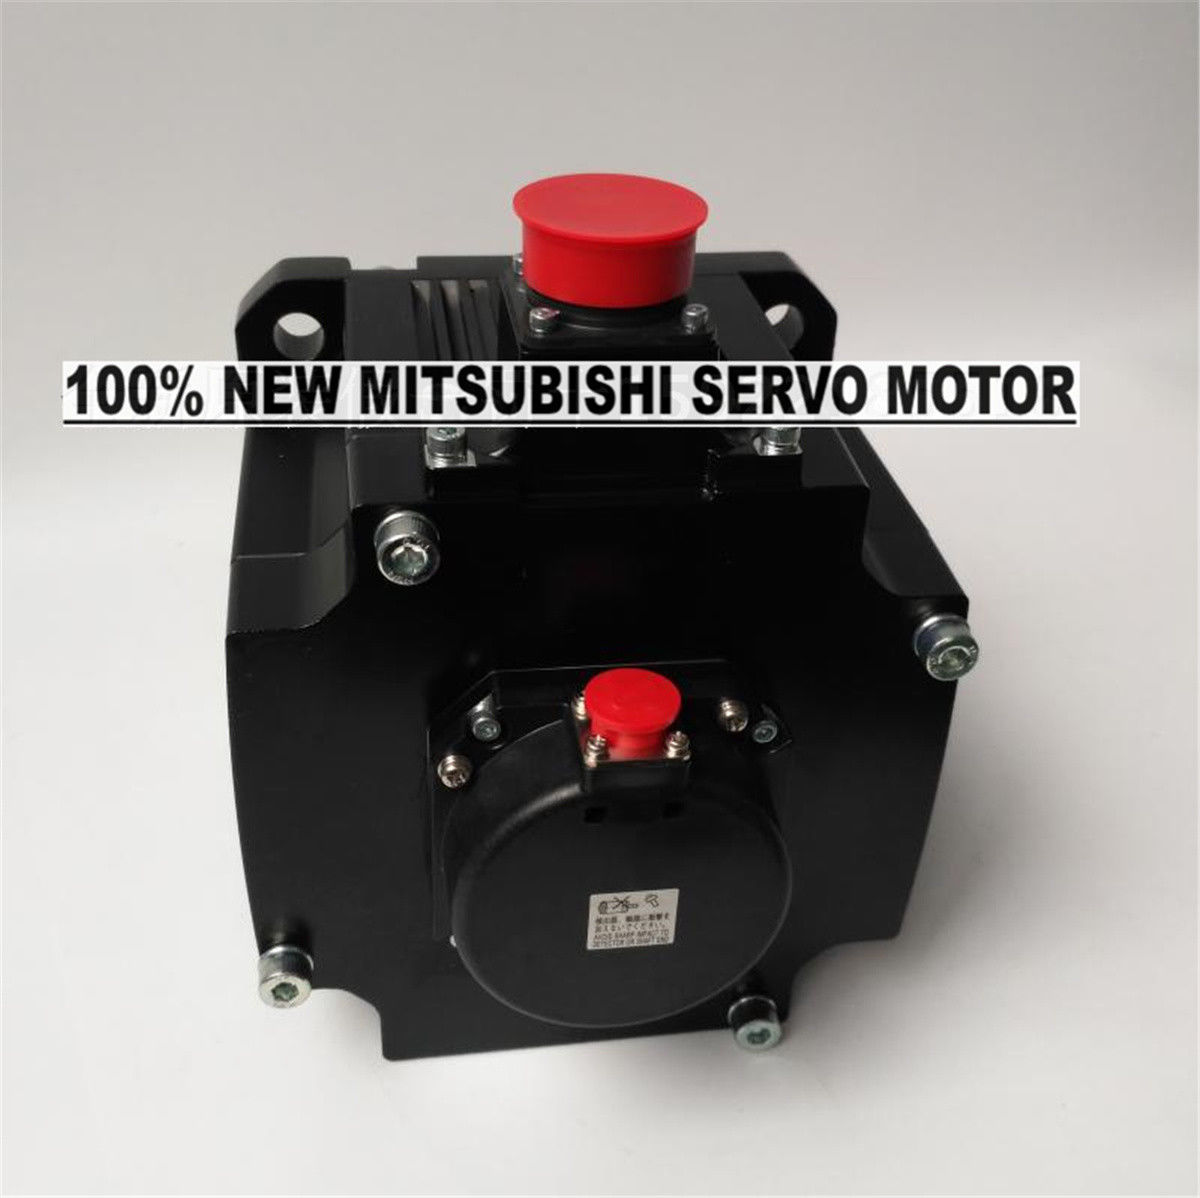 Brand NEW Mitsubishi Servo Motor HF-SP352 in box HFSP352 - Click Image to Close